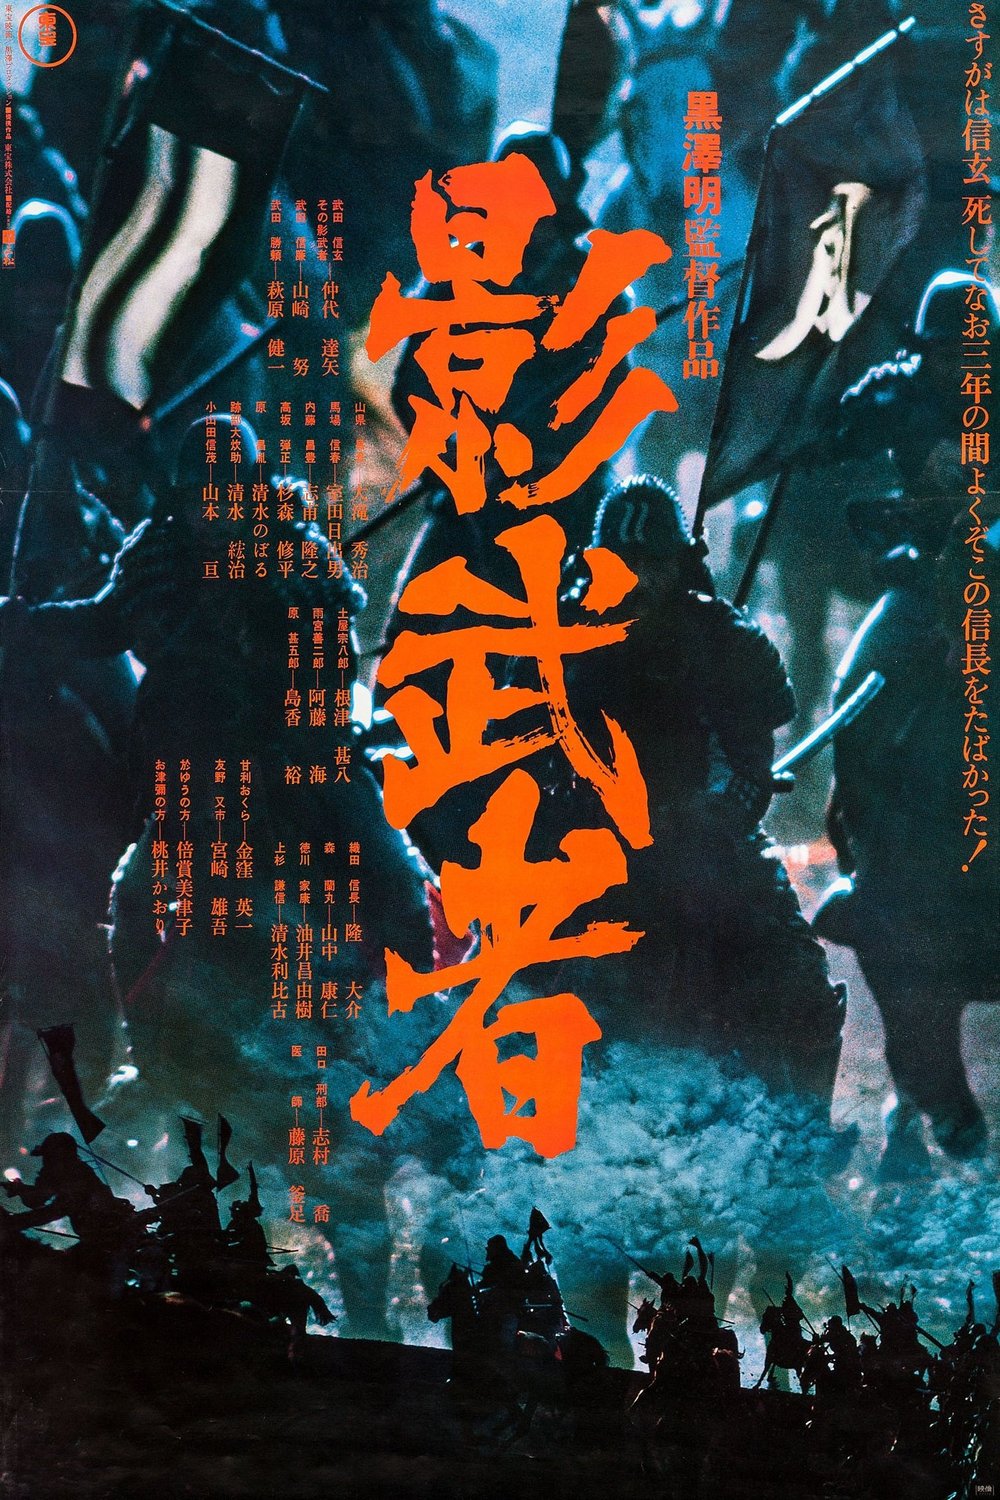 Japanese poster of the movie Kagemusha